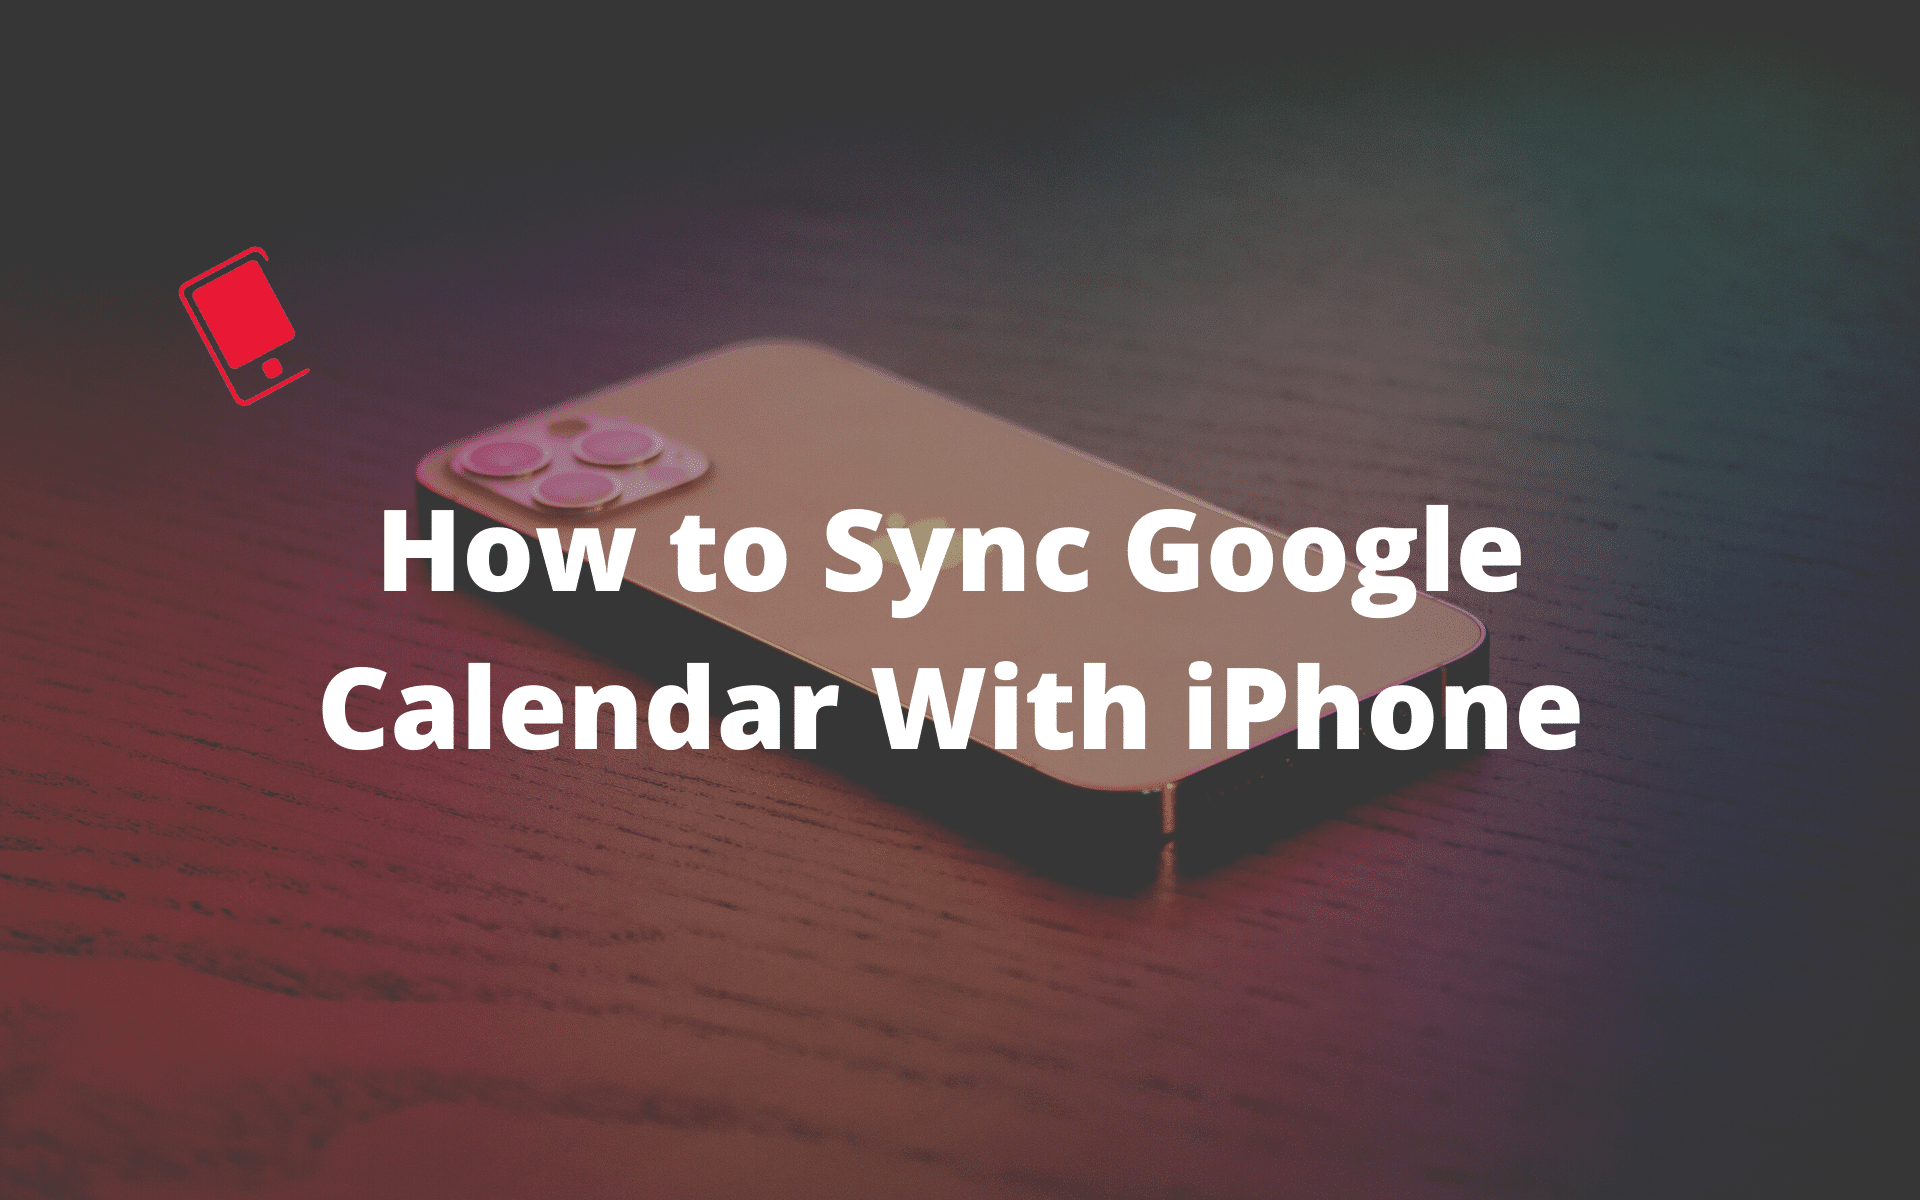 sync google calendar with iPhone